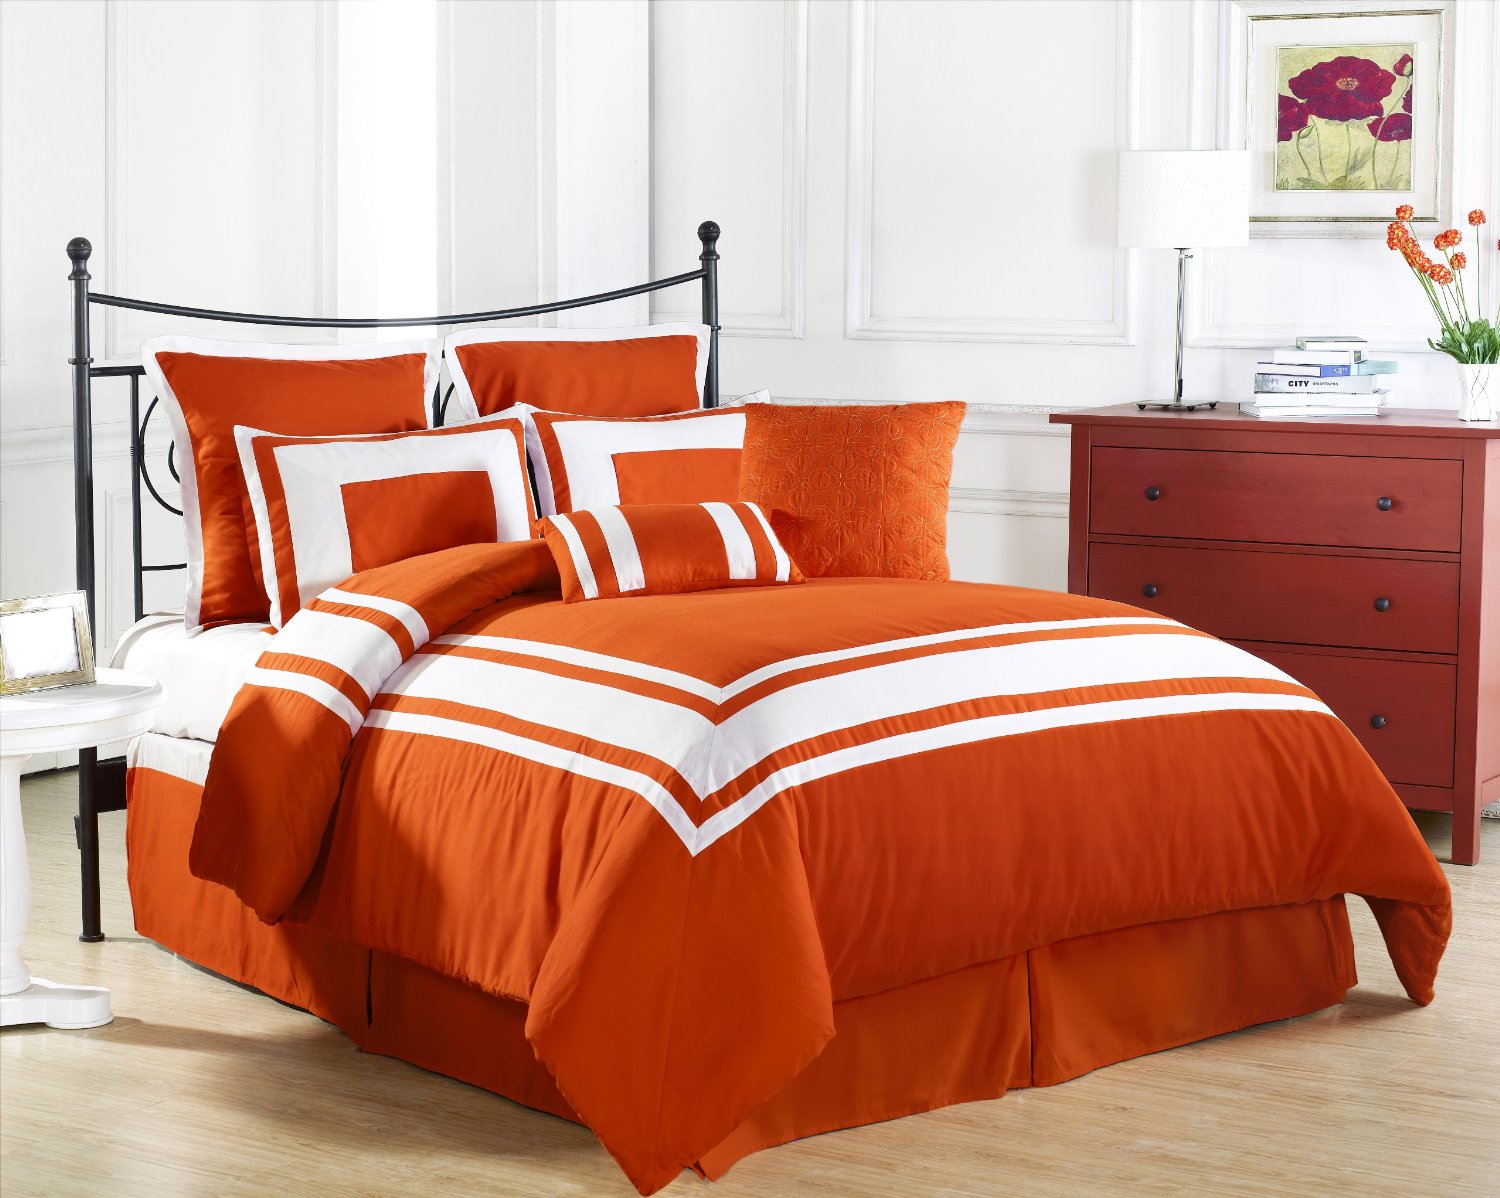 Orange Bedding